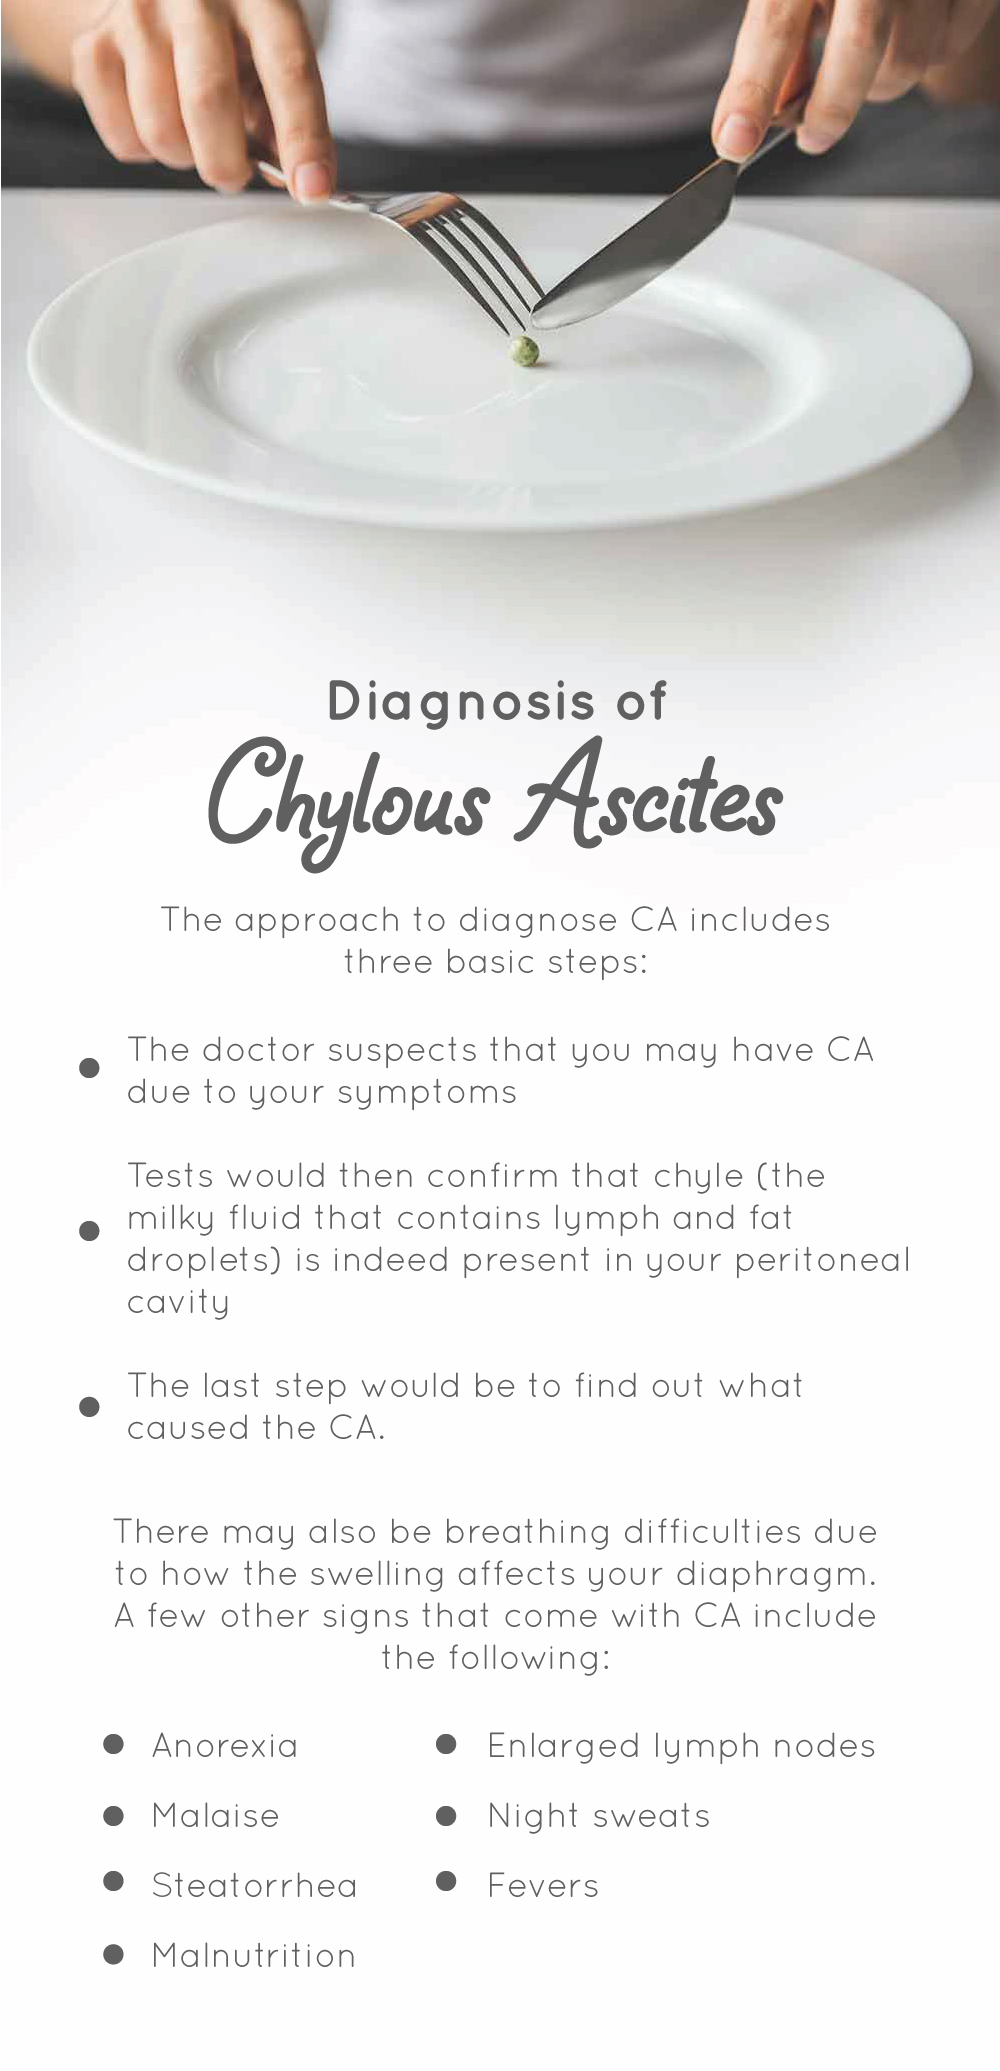 Diagnosis of Chylous Ascites